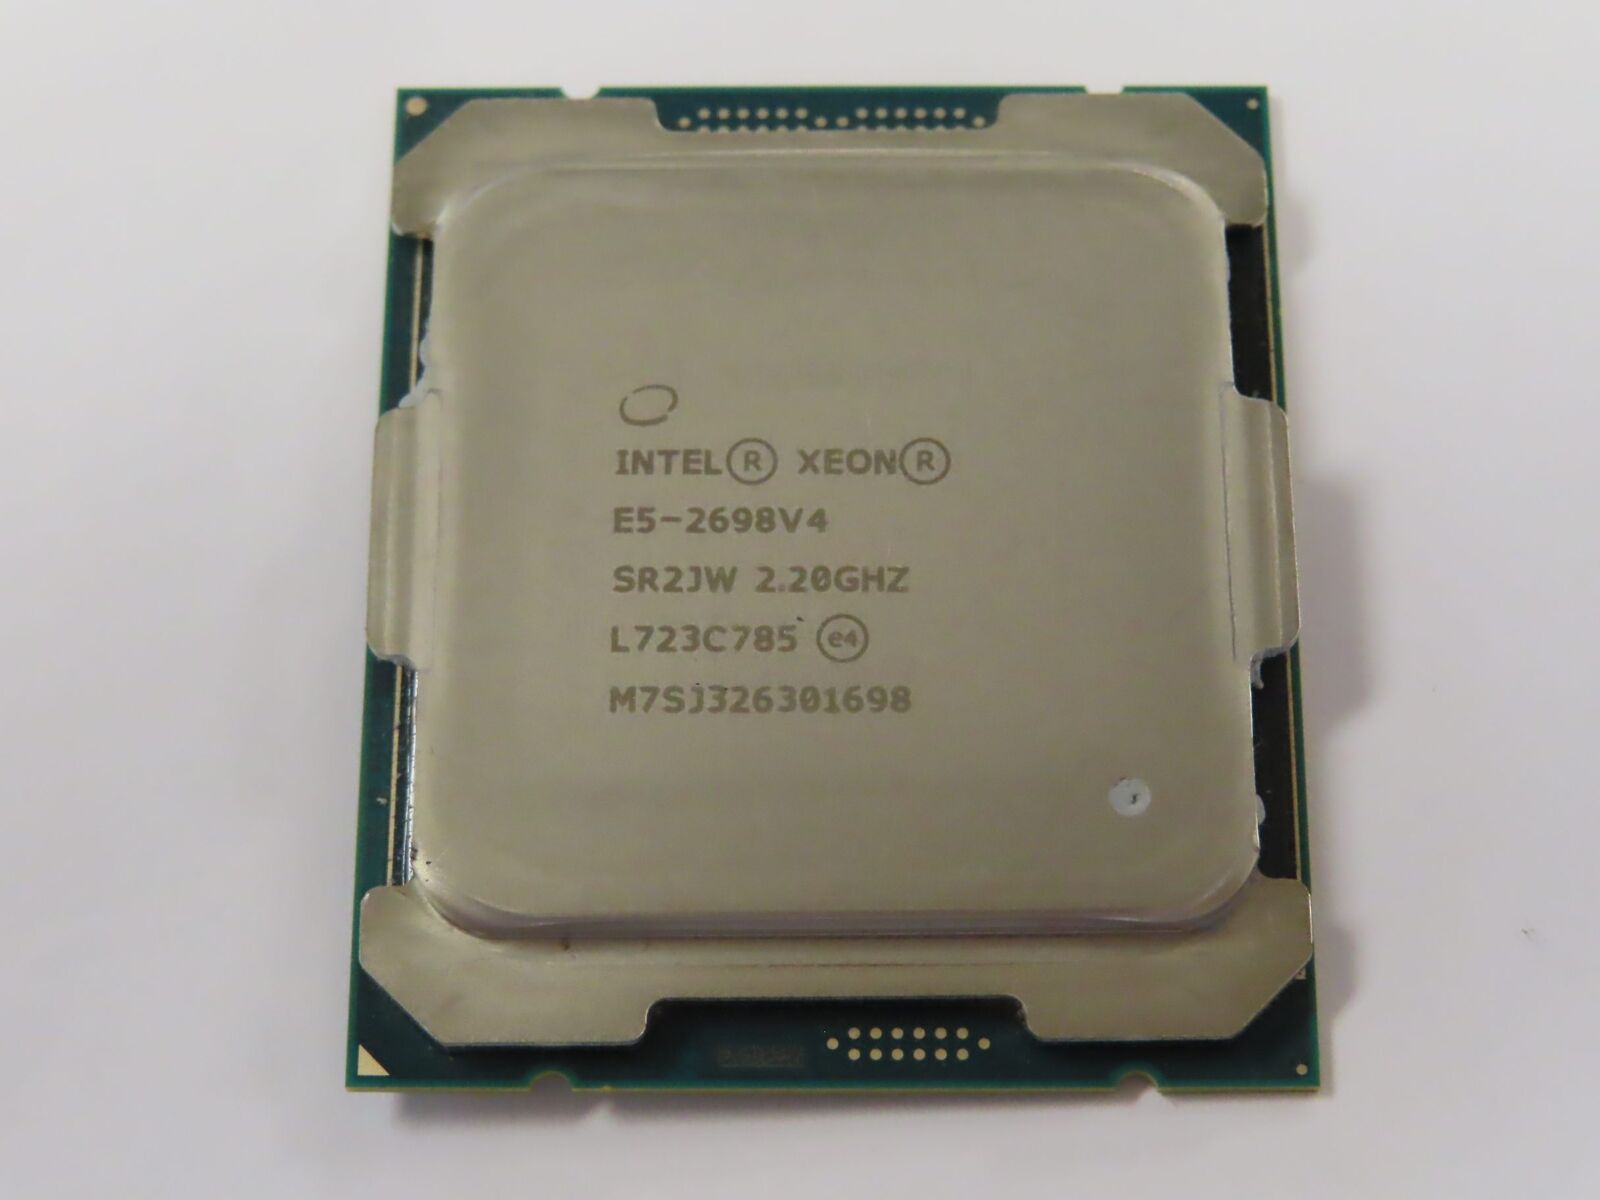 Intel Xeon E5-2698 V4 2.20GHz 50MB 20 Core 9.6GT/s 135W CPU Processor SR2JW